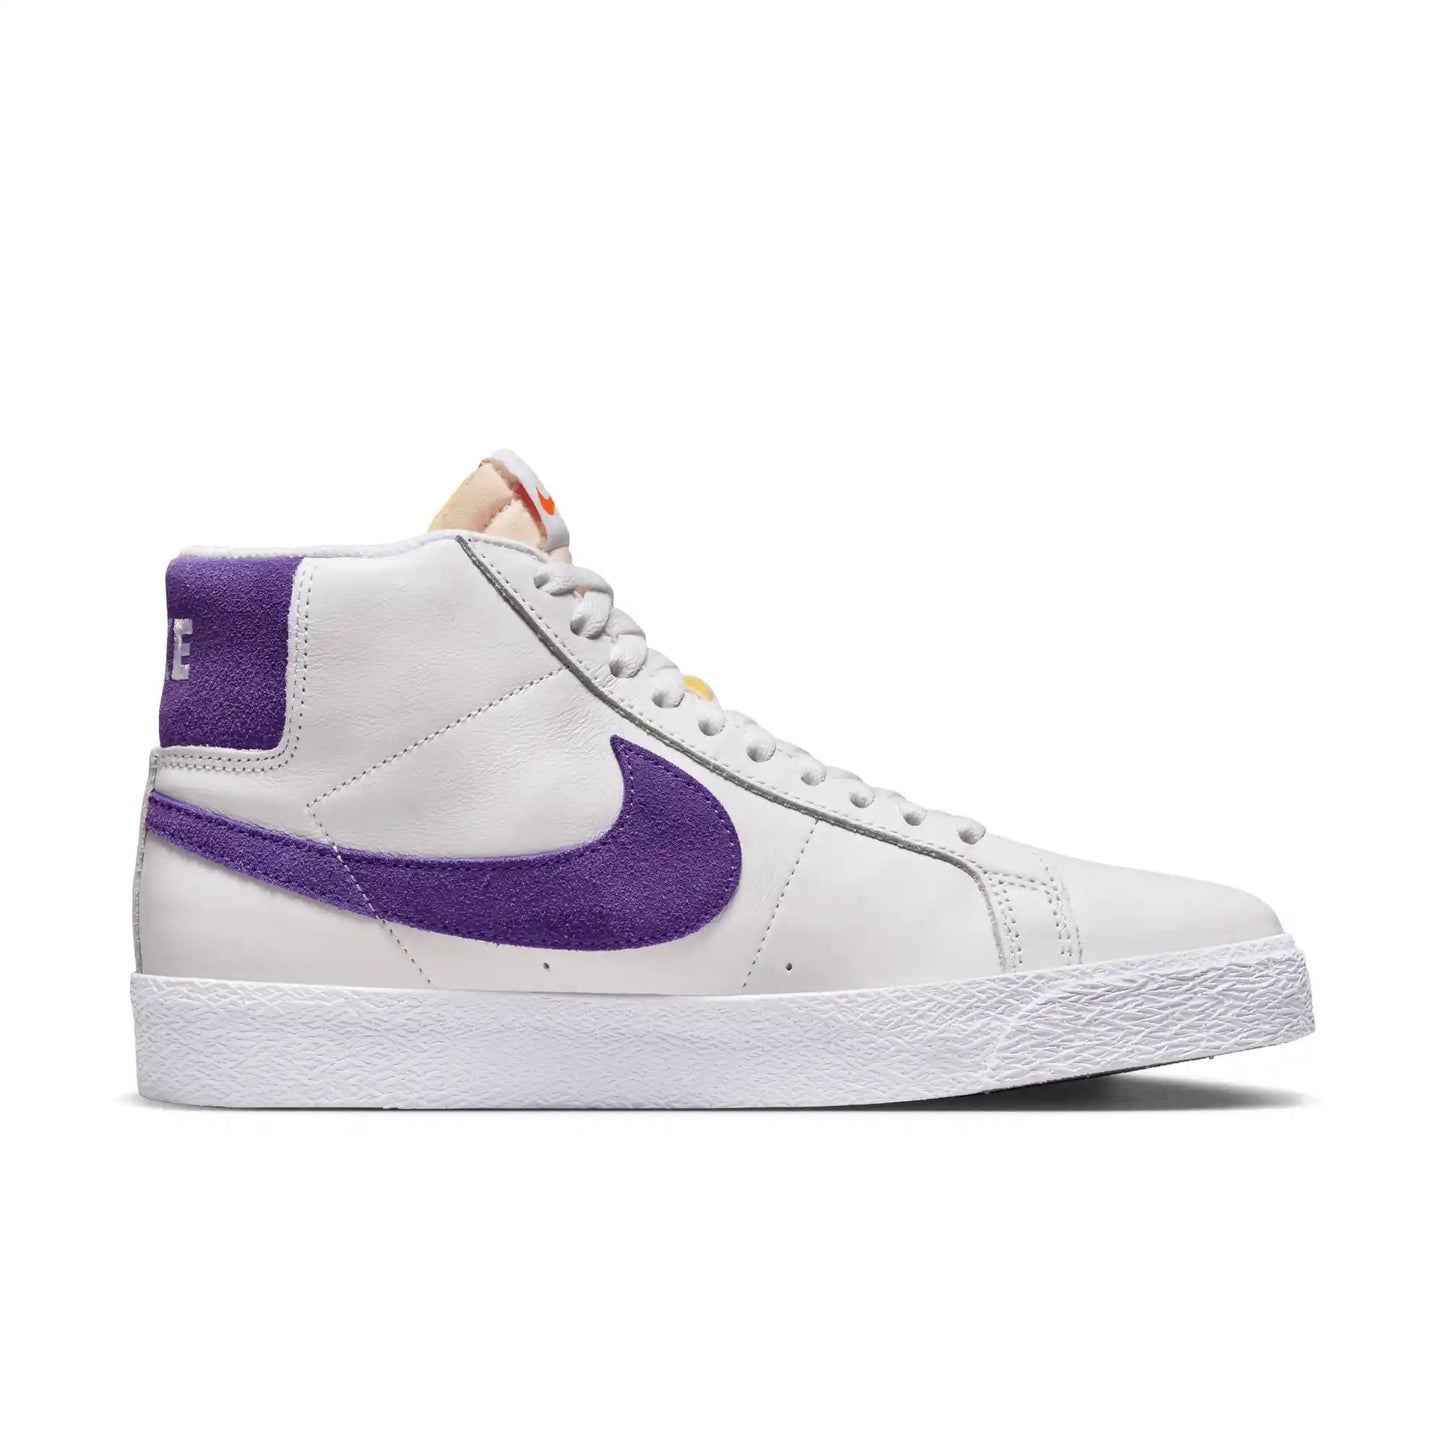 Nike SB Zoom Blazer Mid, white/court purple-white-gum light brown - Tiki Room Skateboards - 9